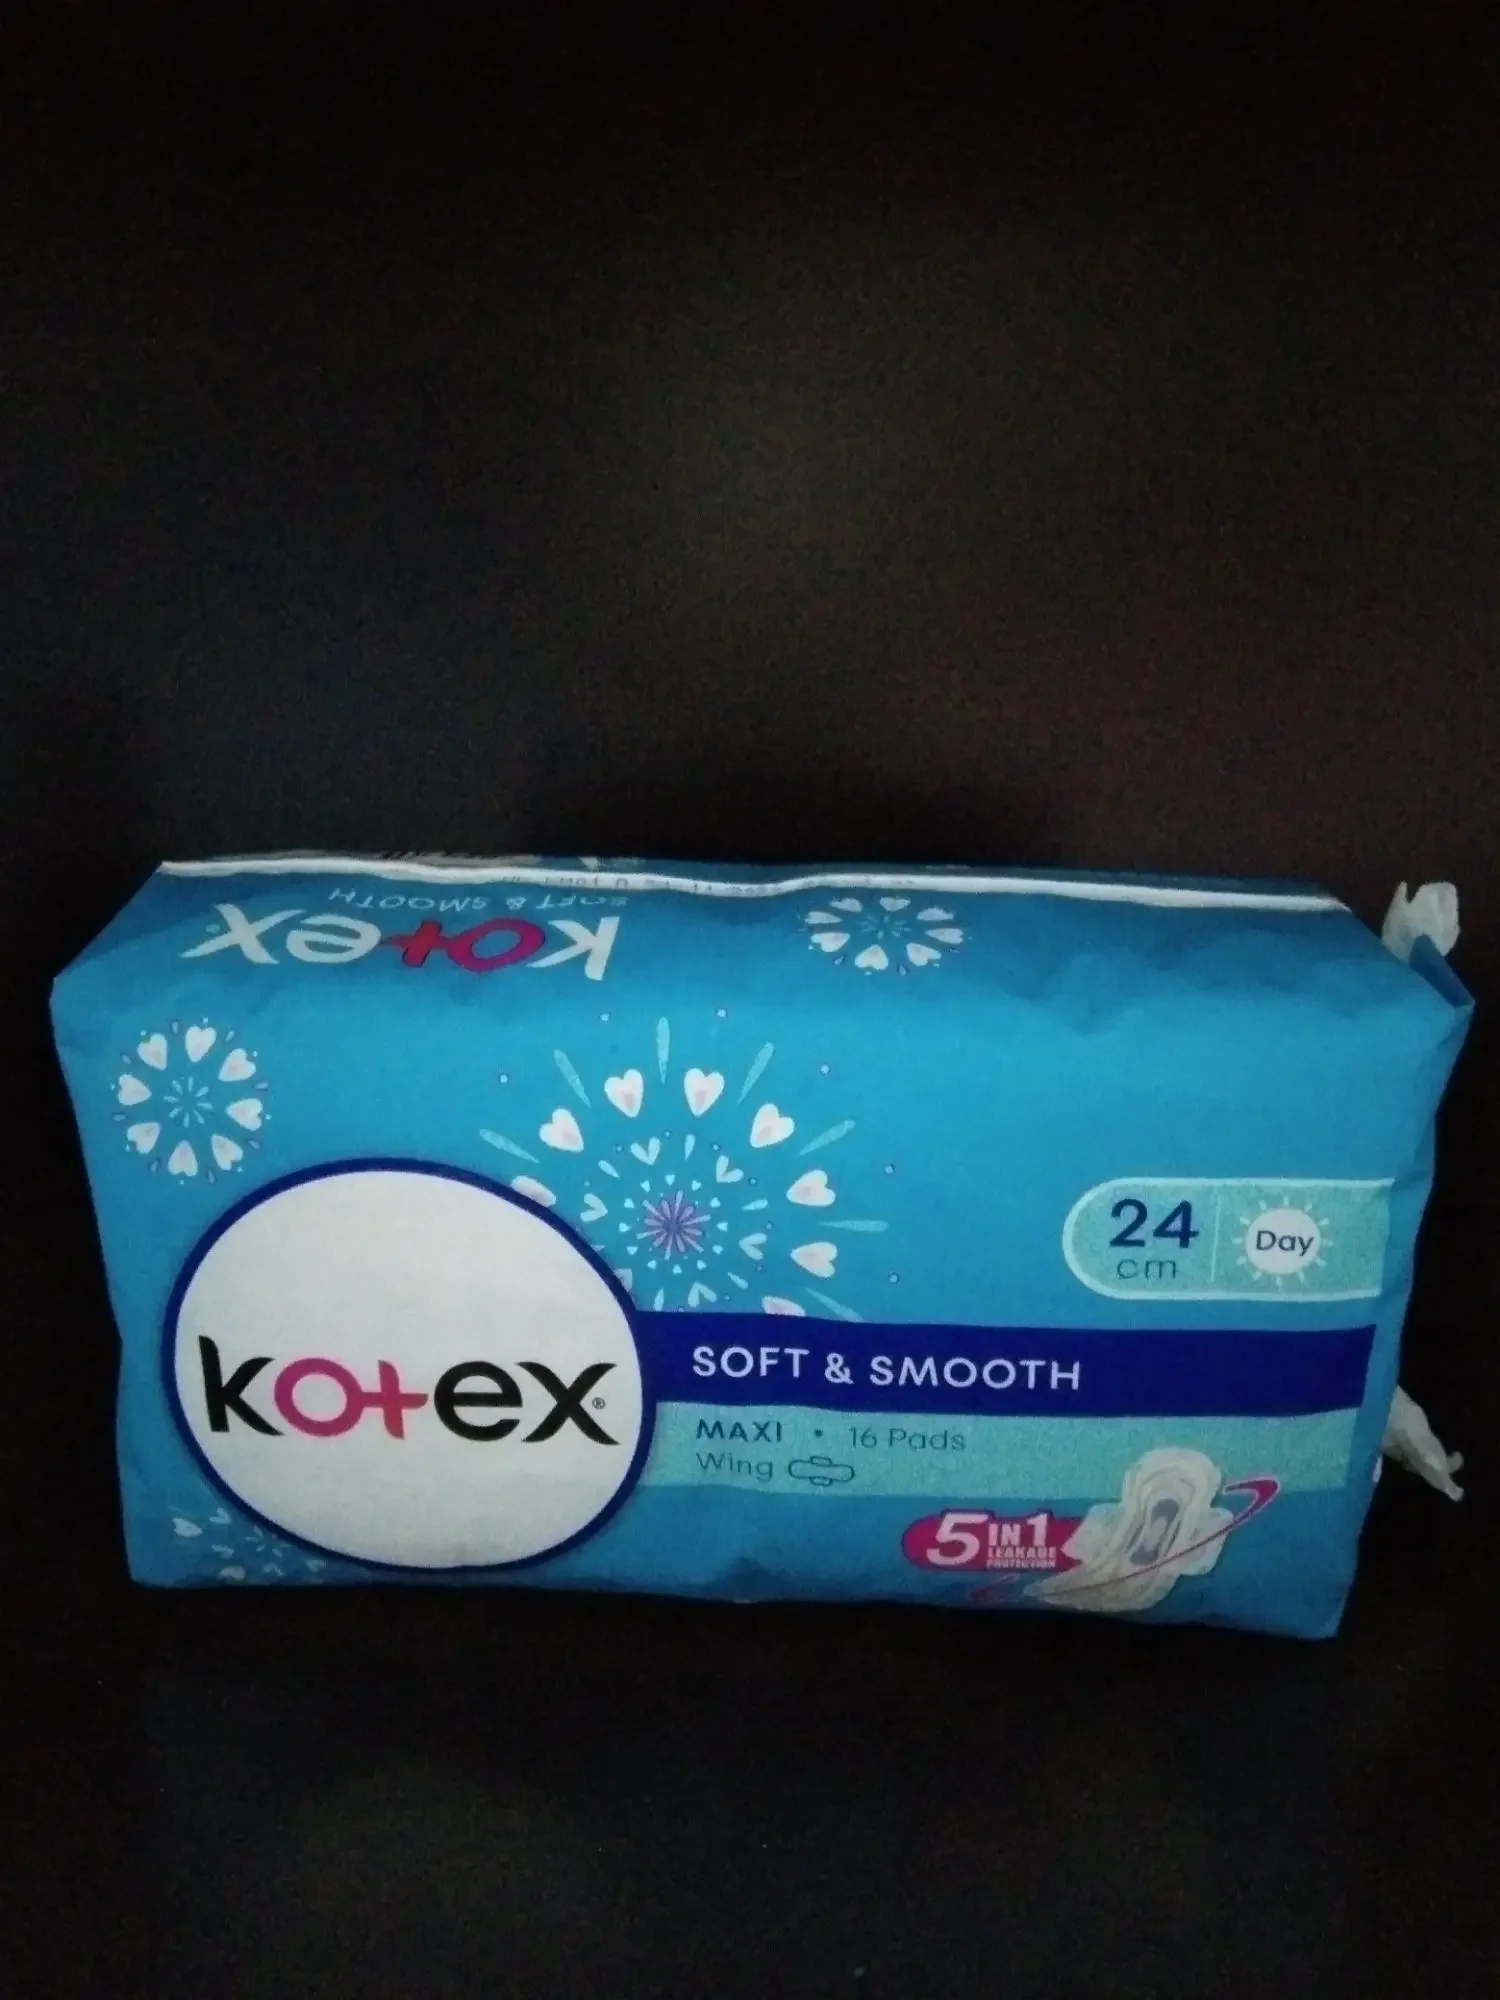 Kotex Soft & Smooth Maxi 24cm x 16Pads(Wing)